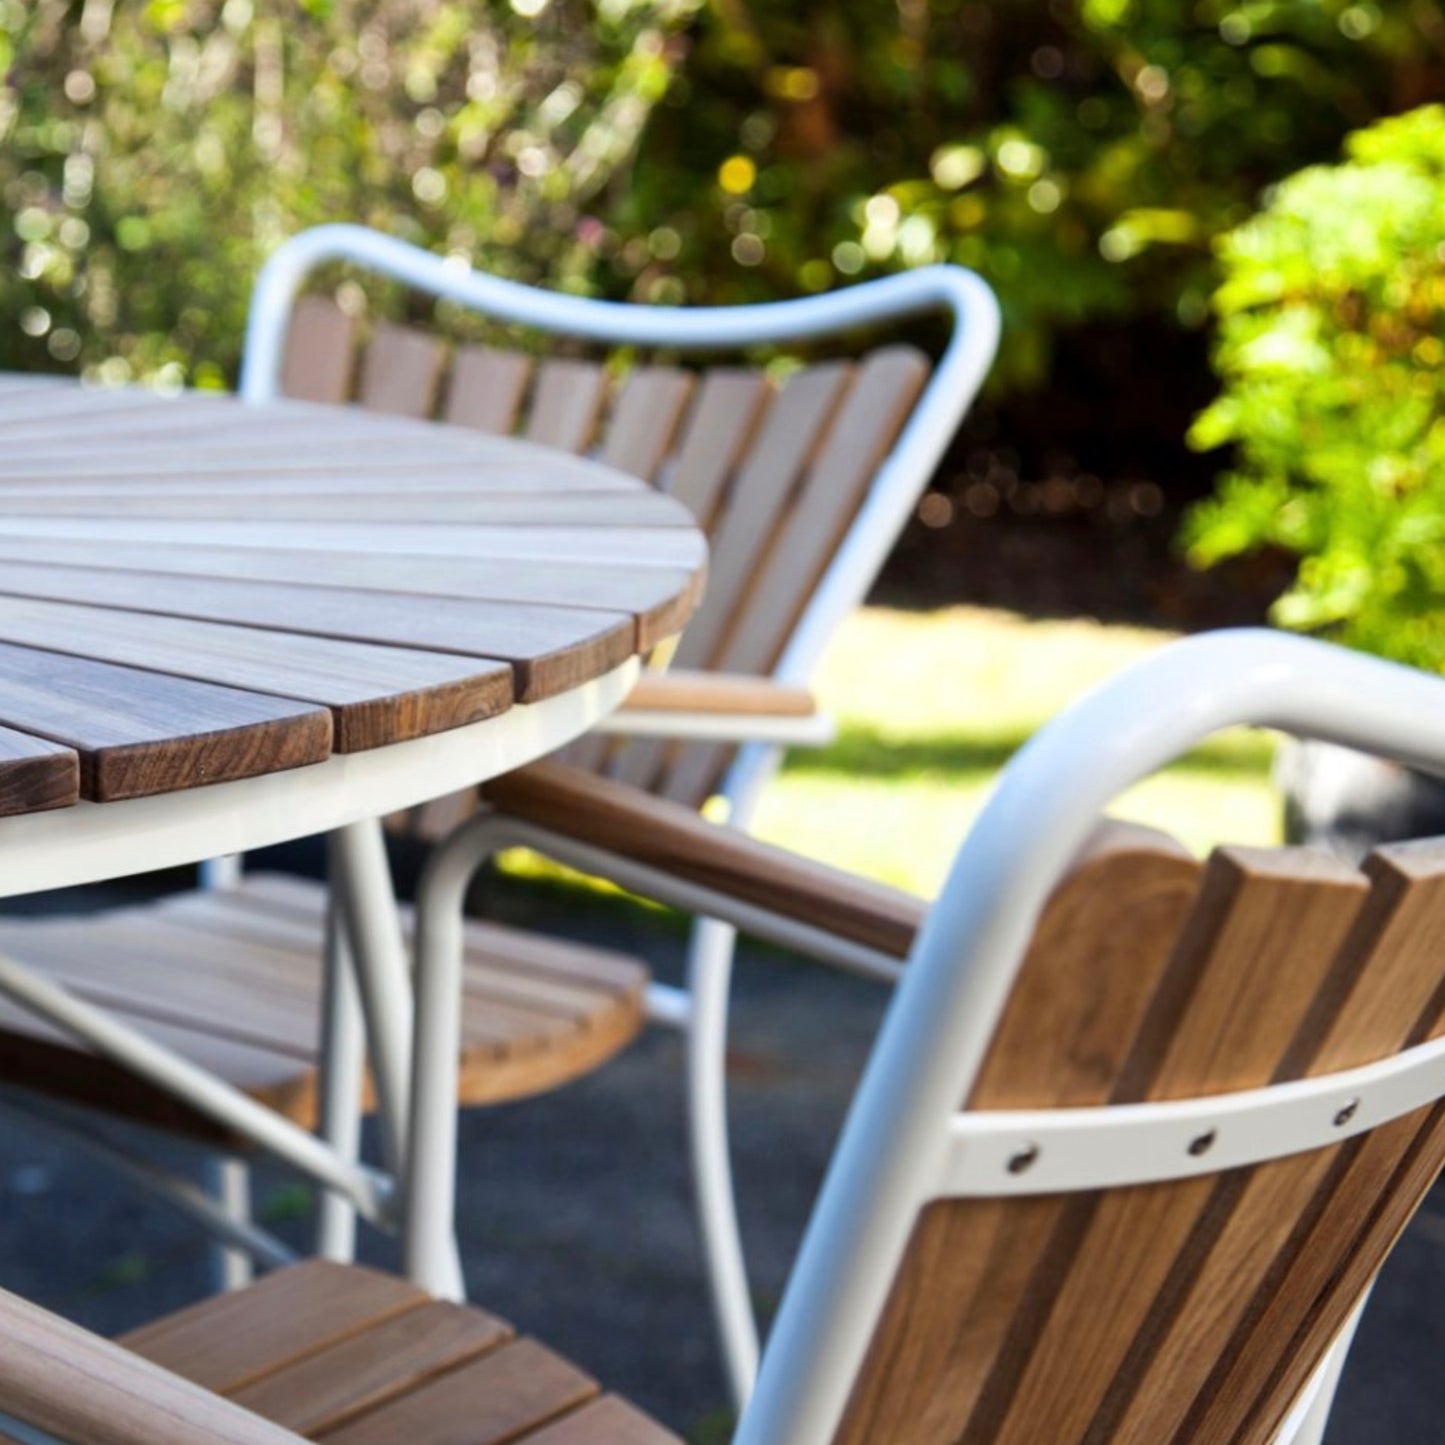 'Ellen' garden furniture set: 110cm table and 4 chairs